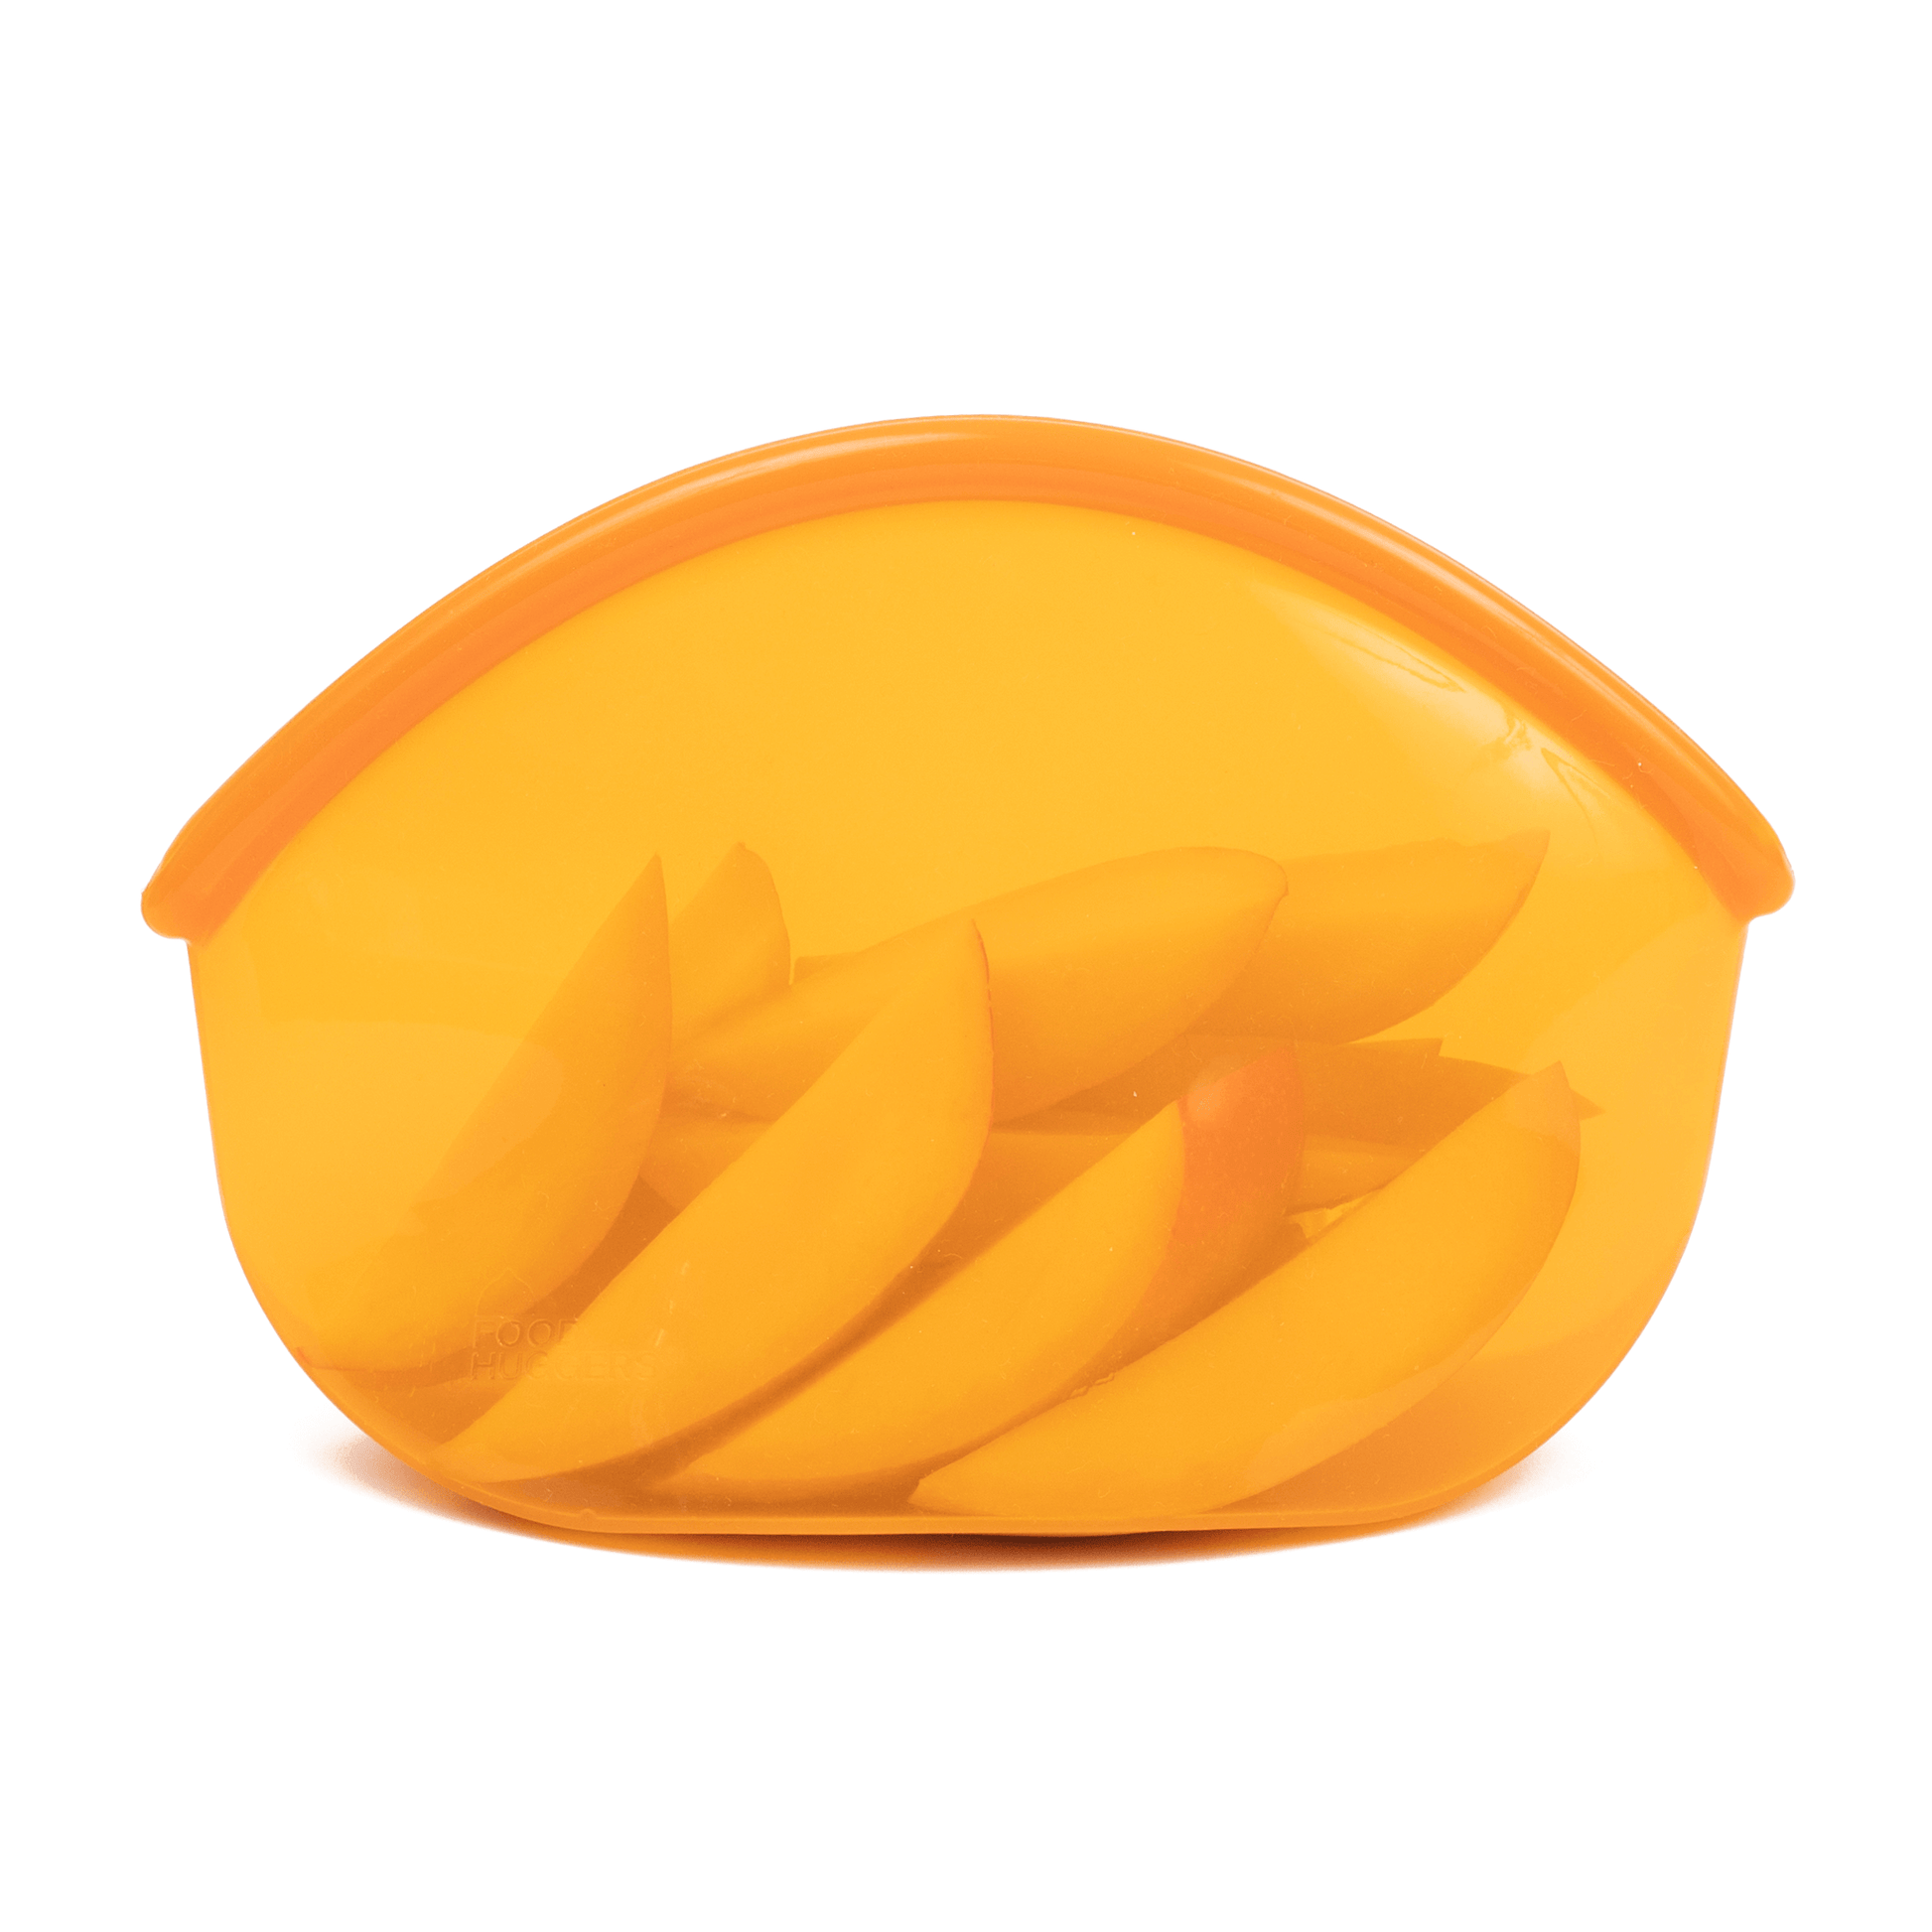 Reusable orange silicone bag, dishwasher safe, preserving pieces of mango, zero waste